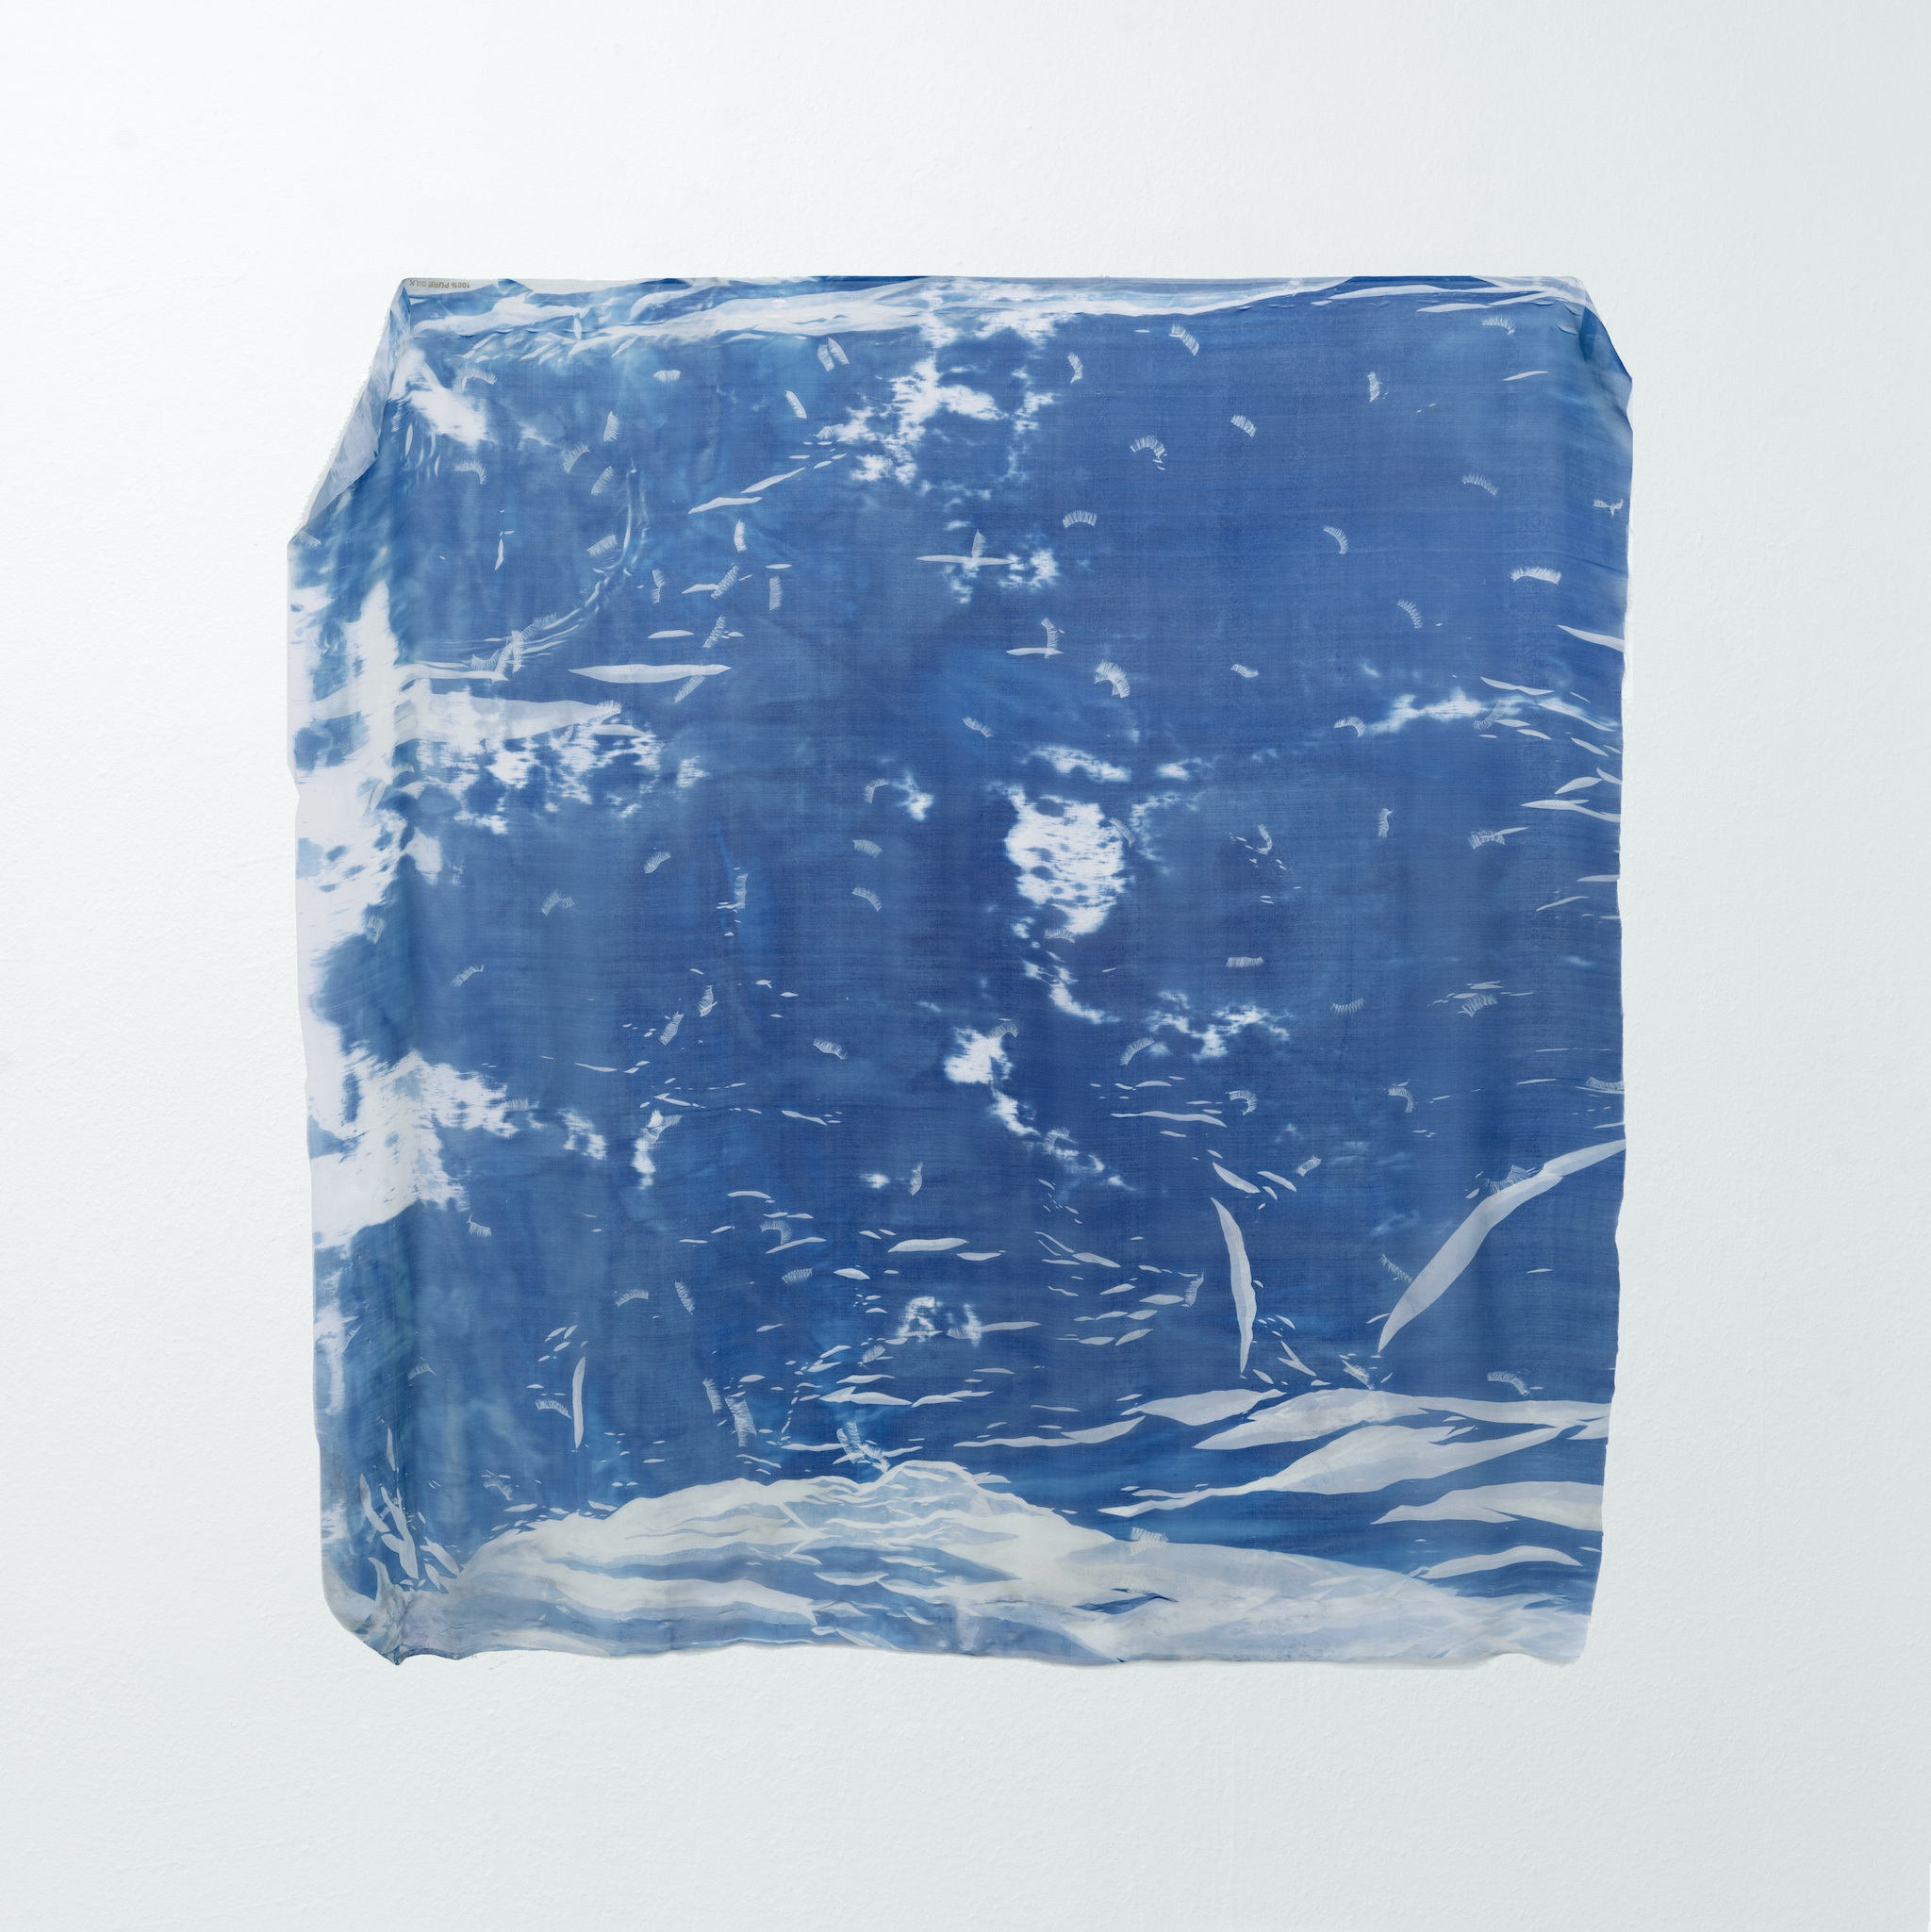 Dyveke Bredsdorff, â€œThe North Poleâ€�, 2022. Cyanotype on chiffon silk, 15 minutes artificial exposure, 127.0 x 141.5 cm